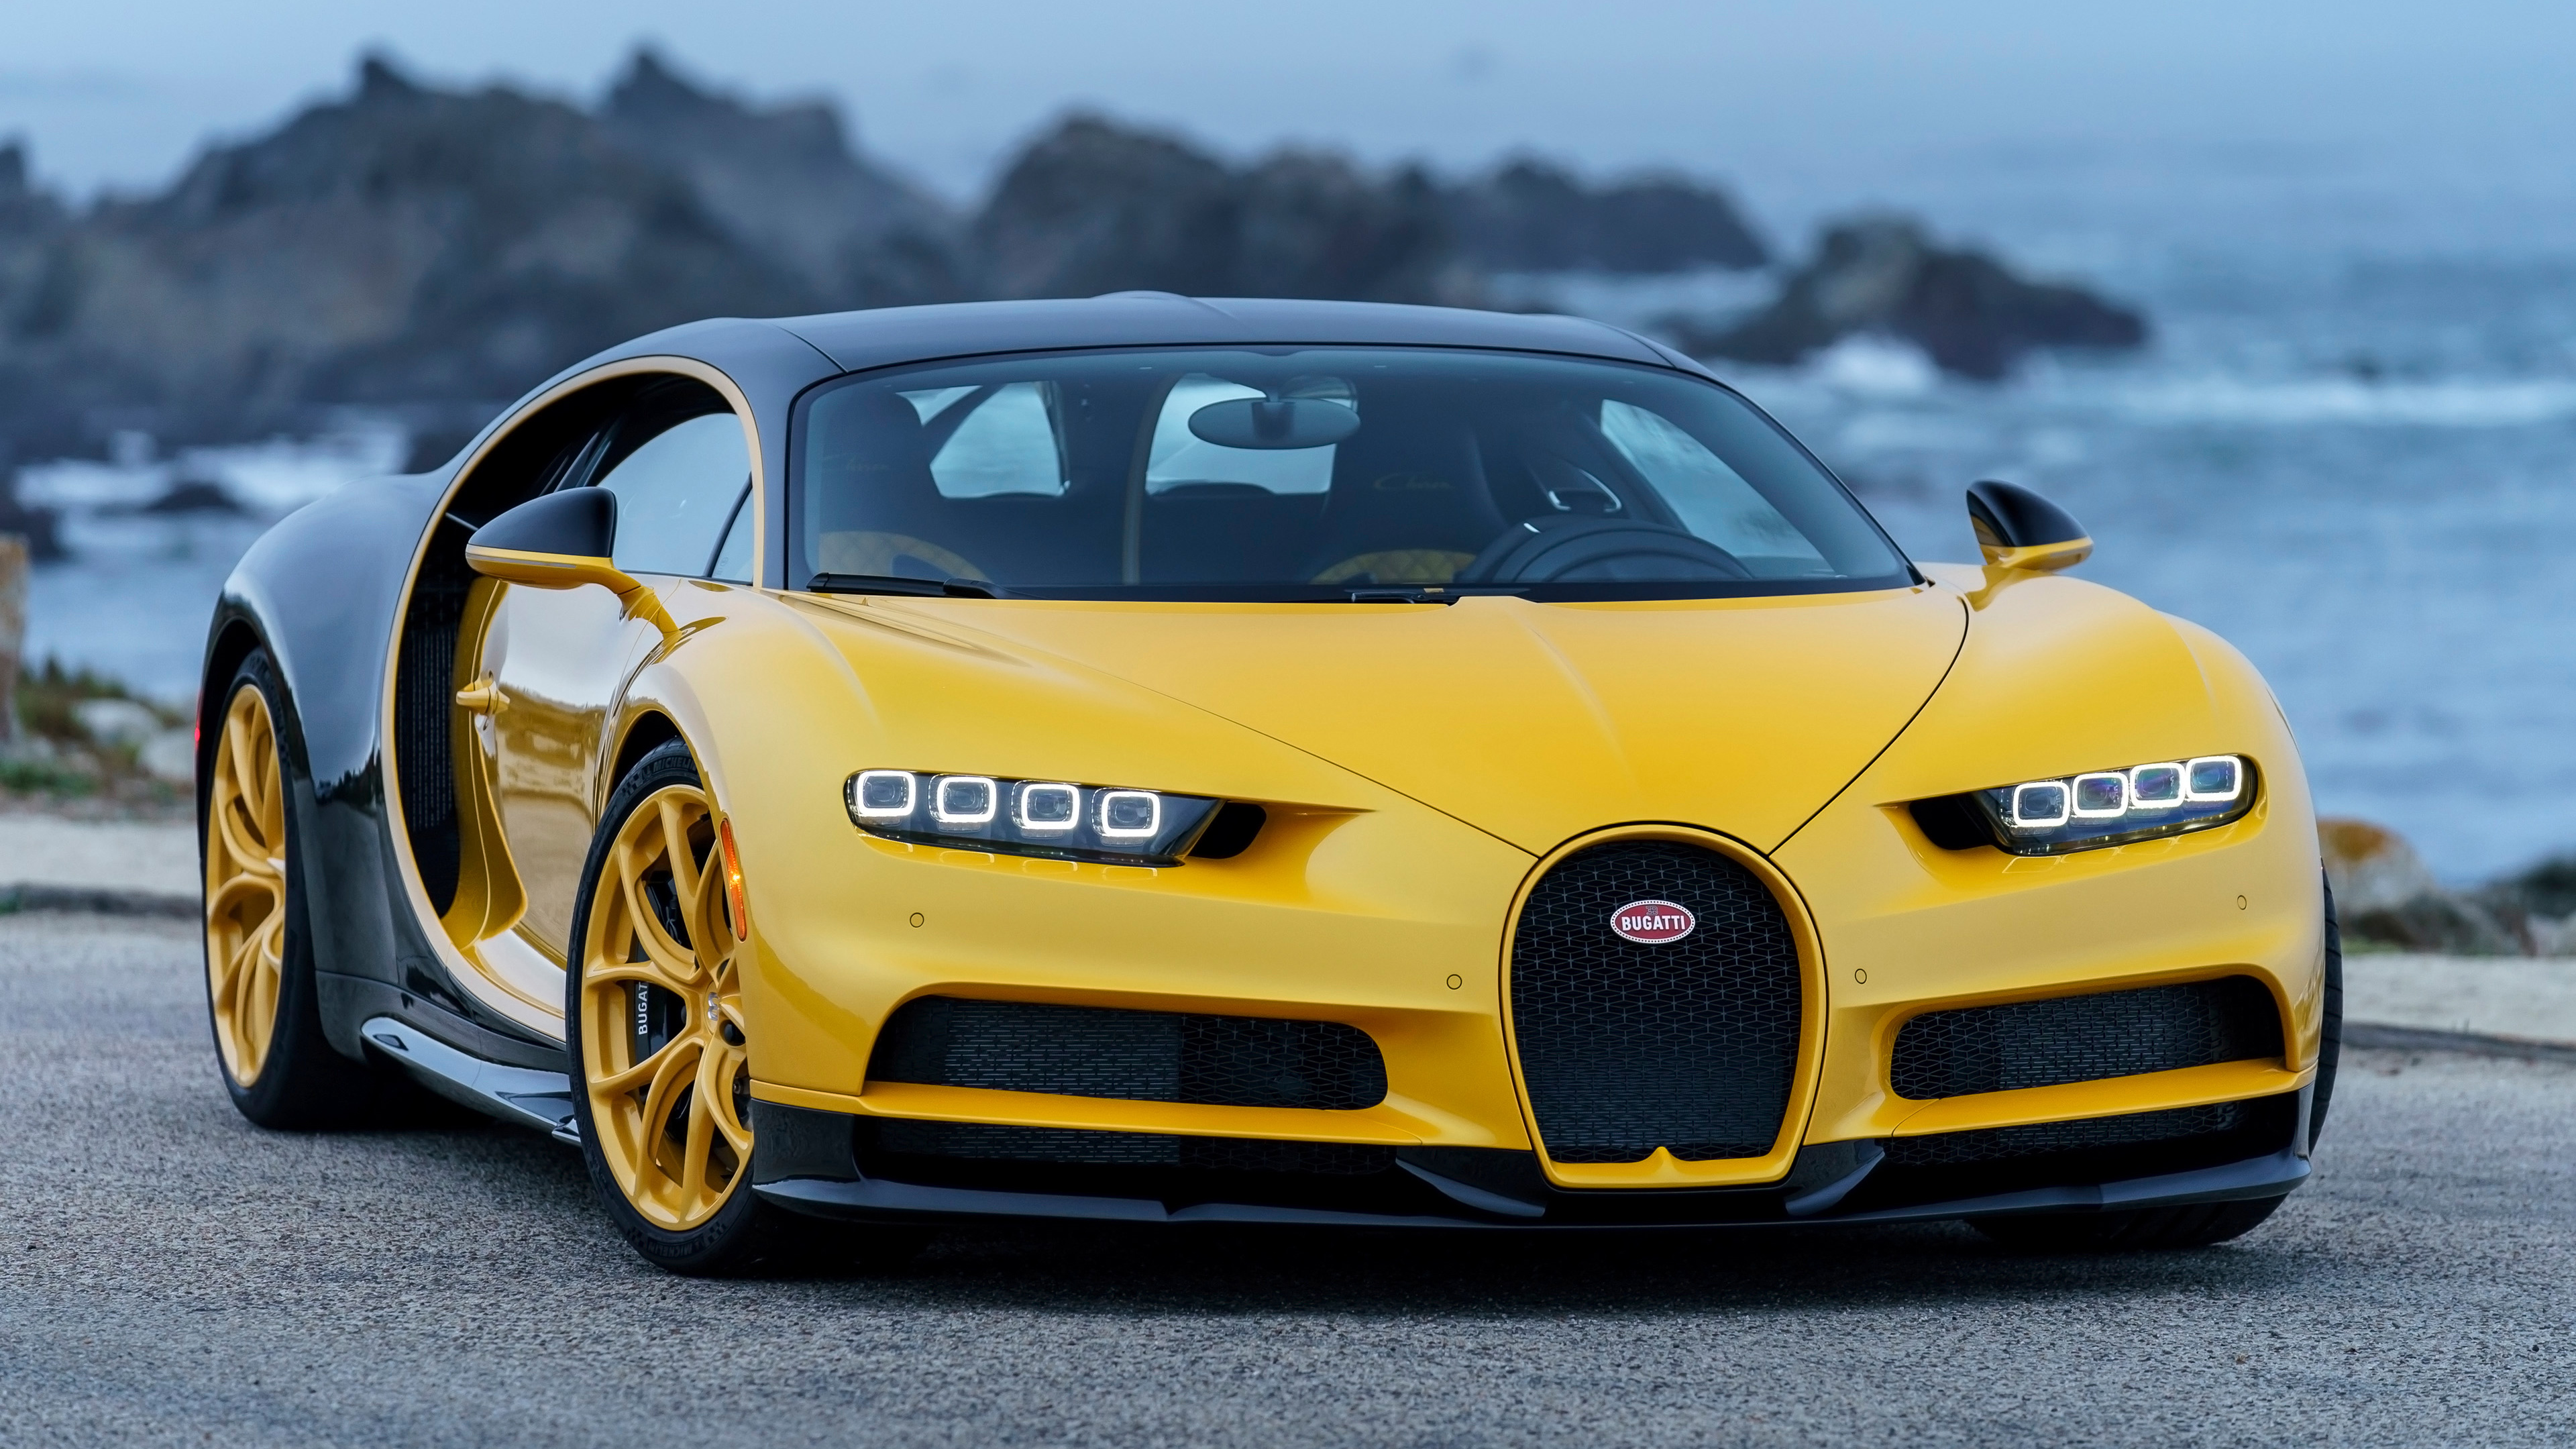 27+] Yellow Bugatti Veyron Wallpapers - WallpaperSafari